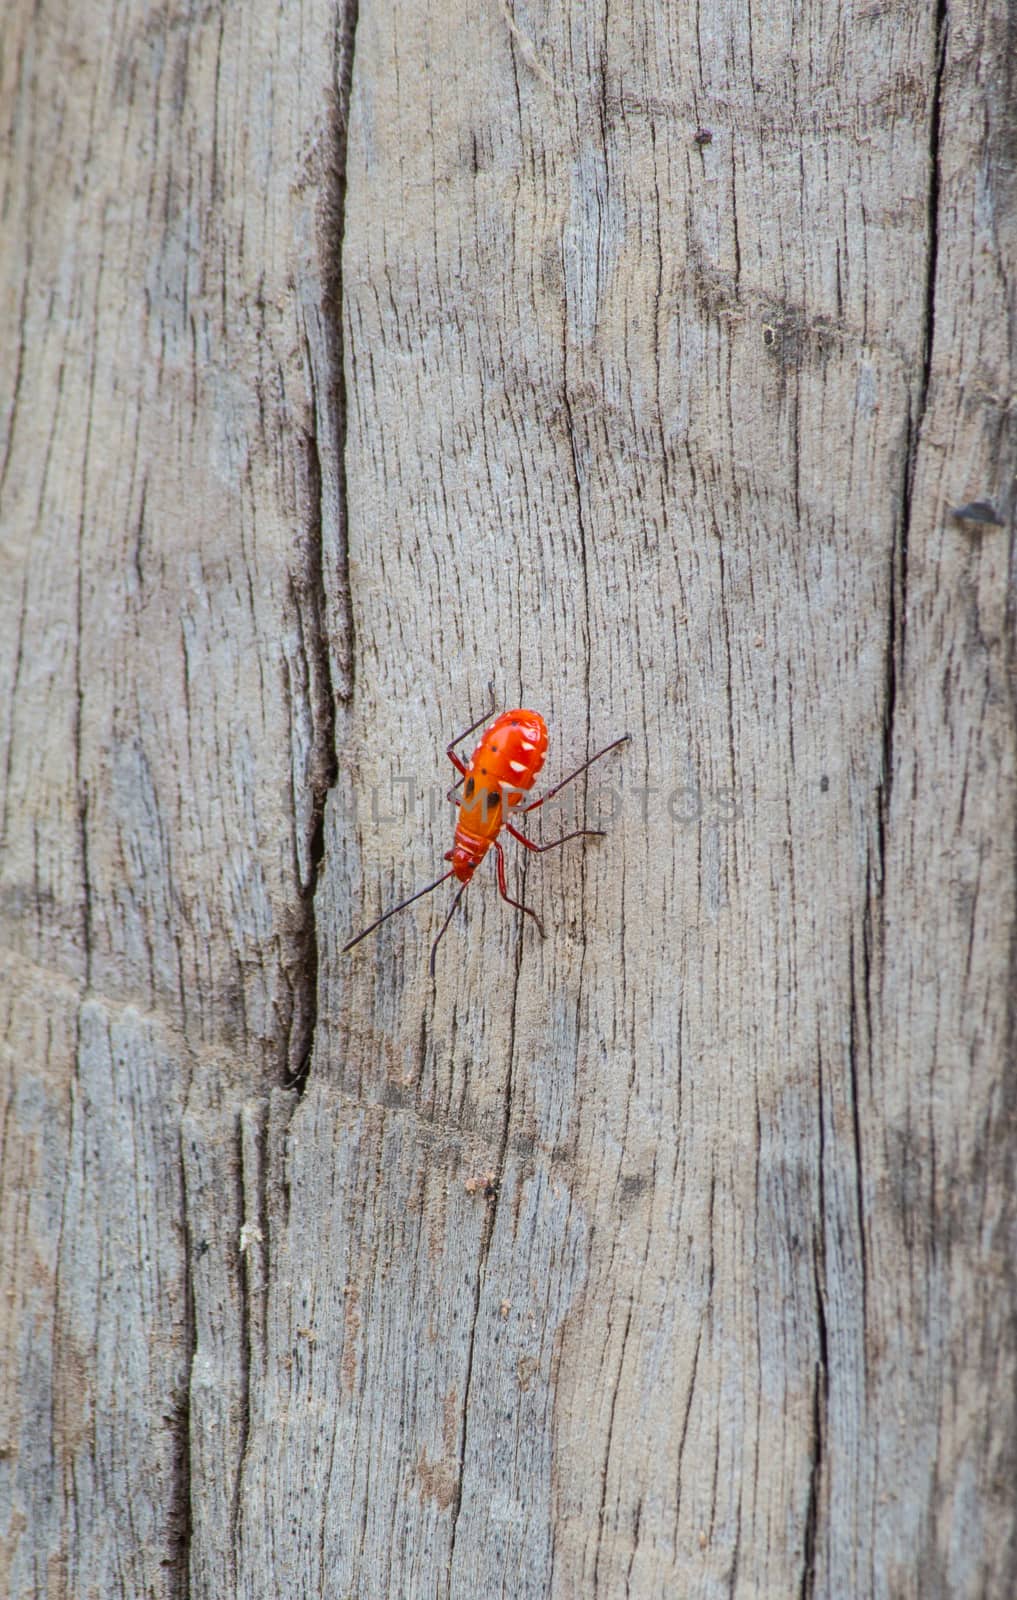 Kapok bug on wood, Probergrothius nigricornis, a common man-faced redbug from Thailand